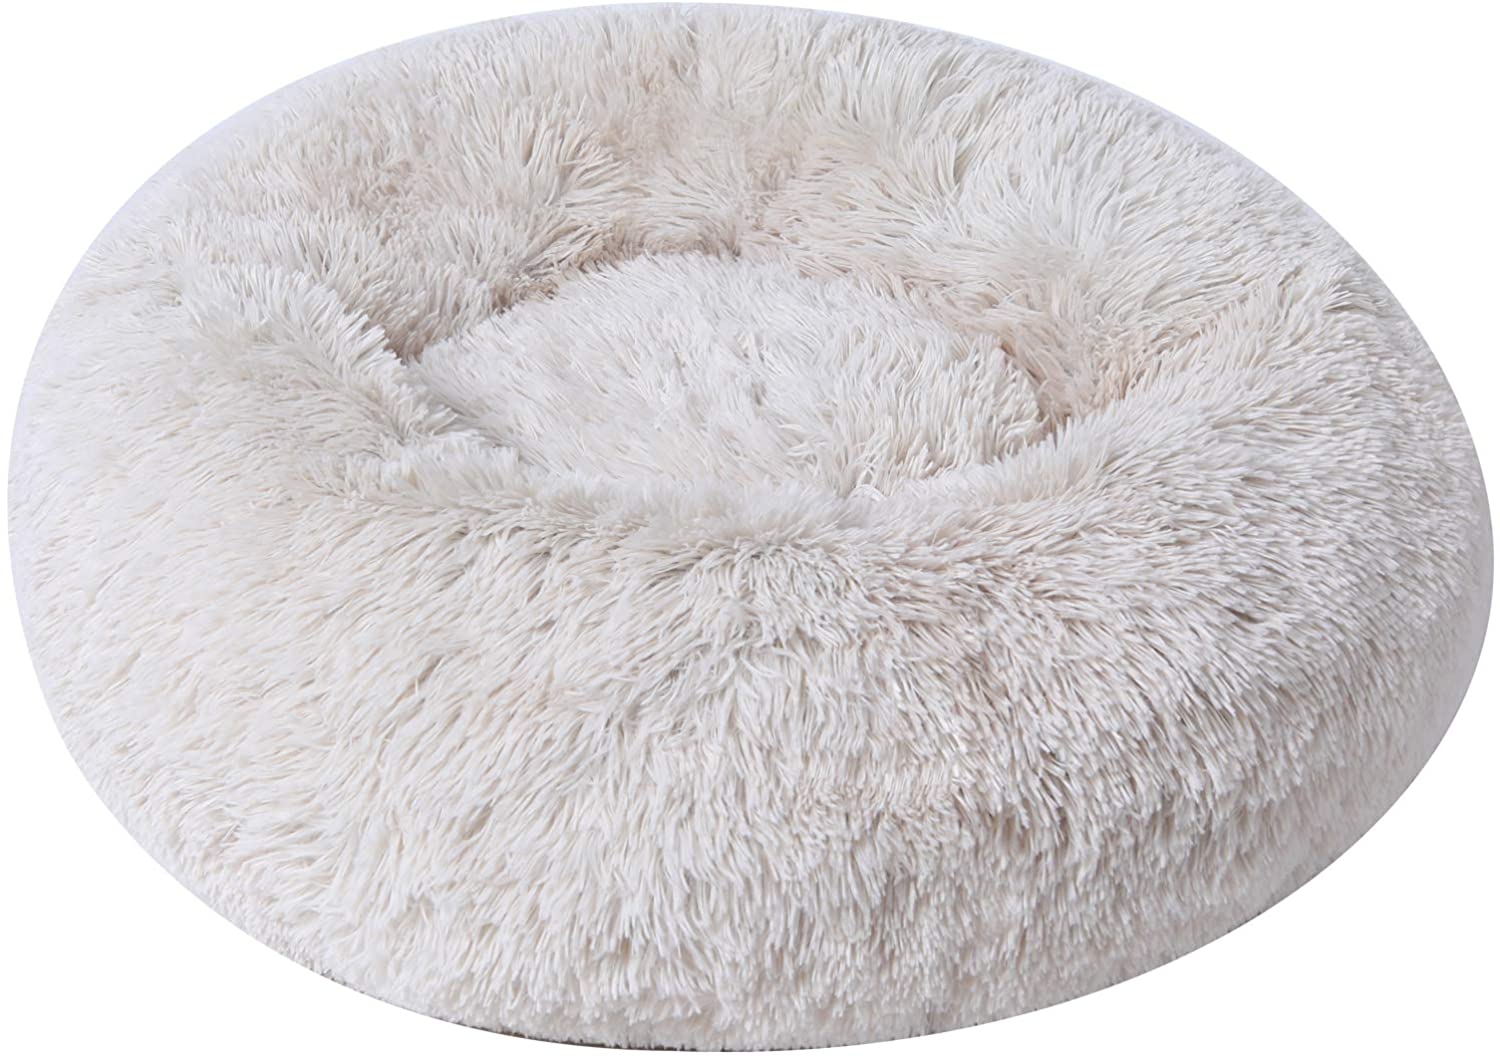 BinetGo Dog Bed Cushion Bed Faux Fur Donut Cuddler